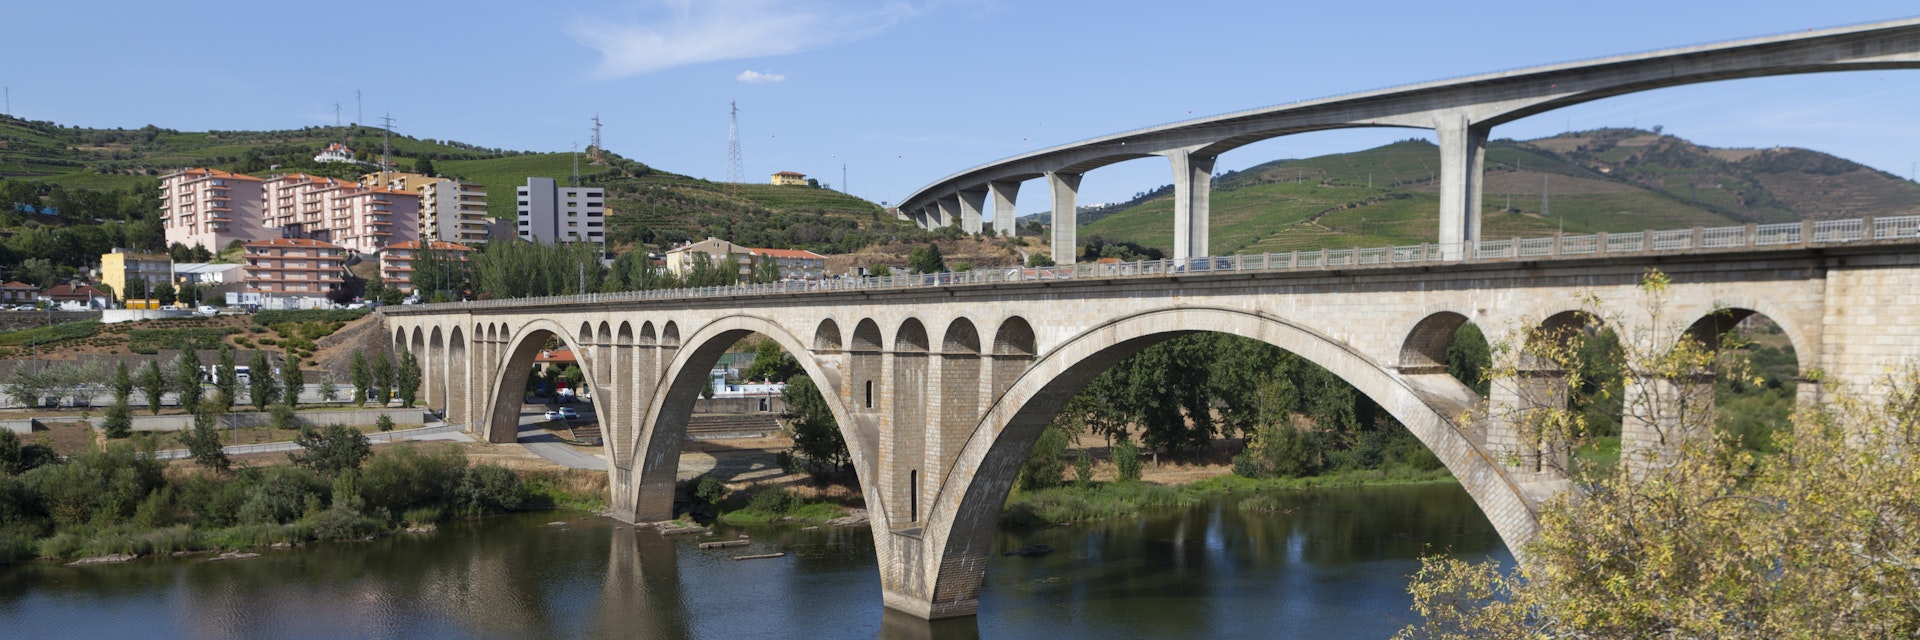 Two Bridges in Peso da Régua, Portugal